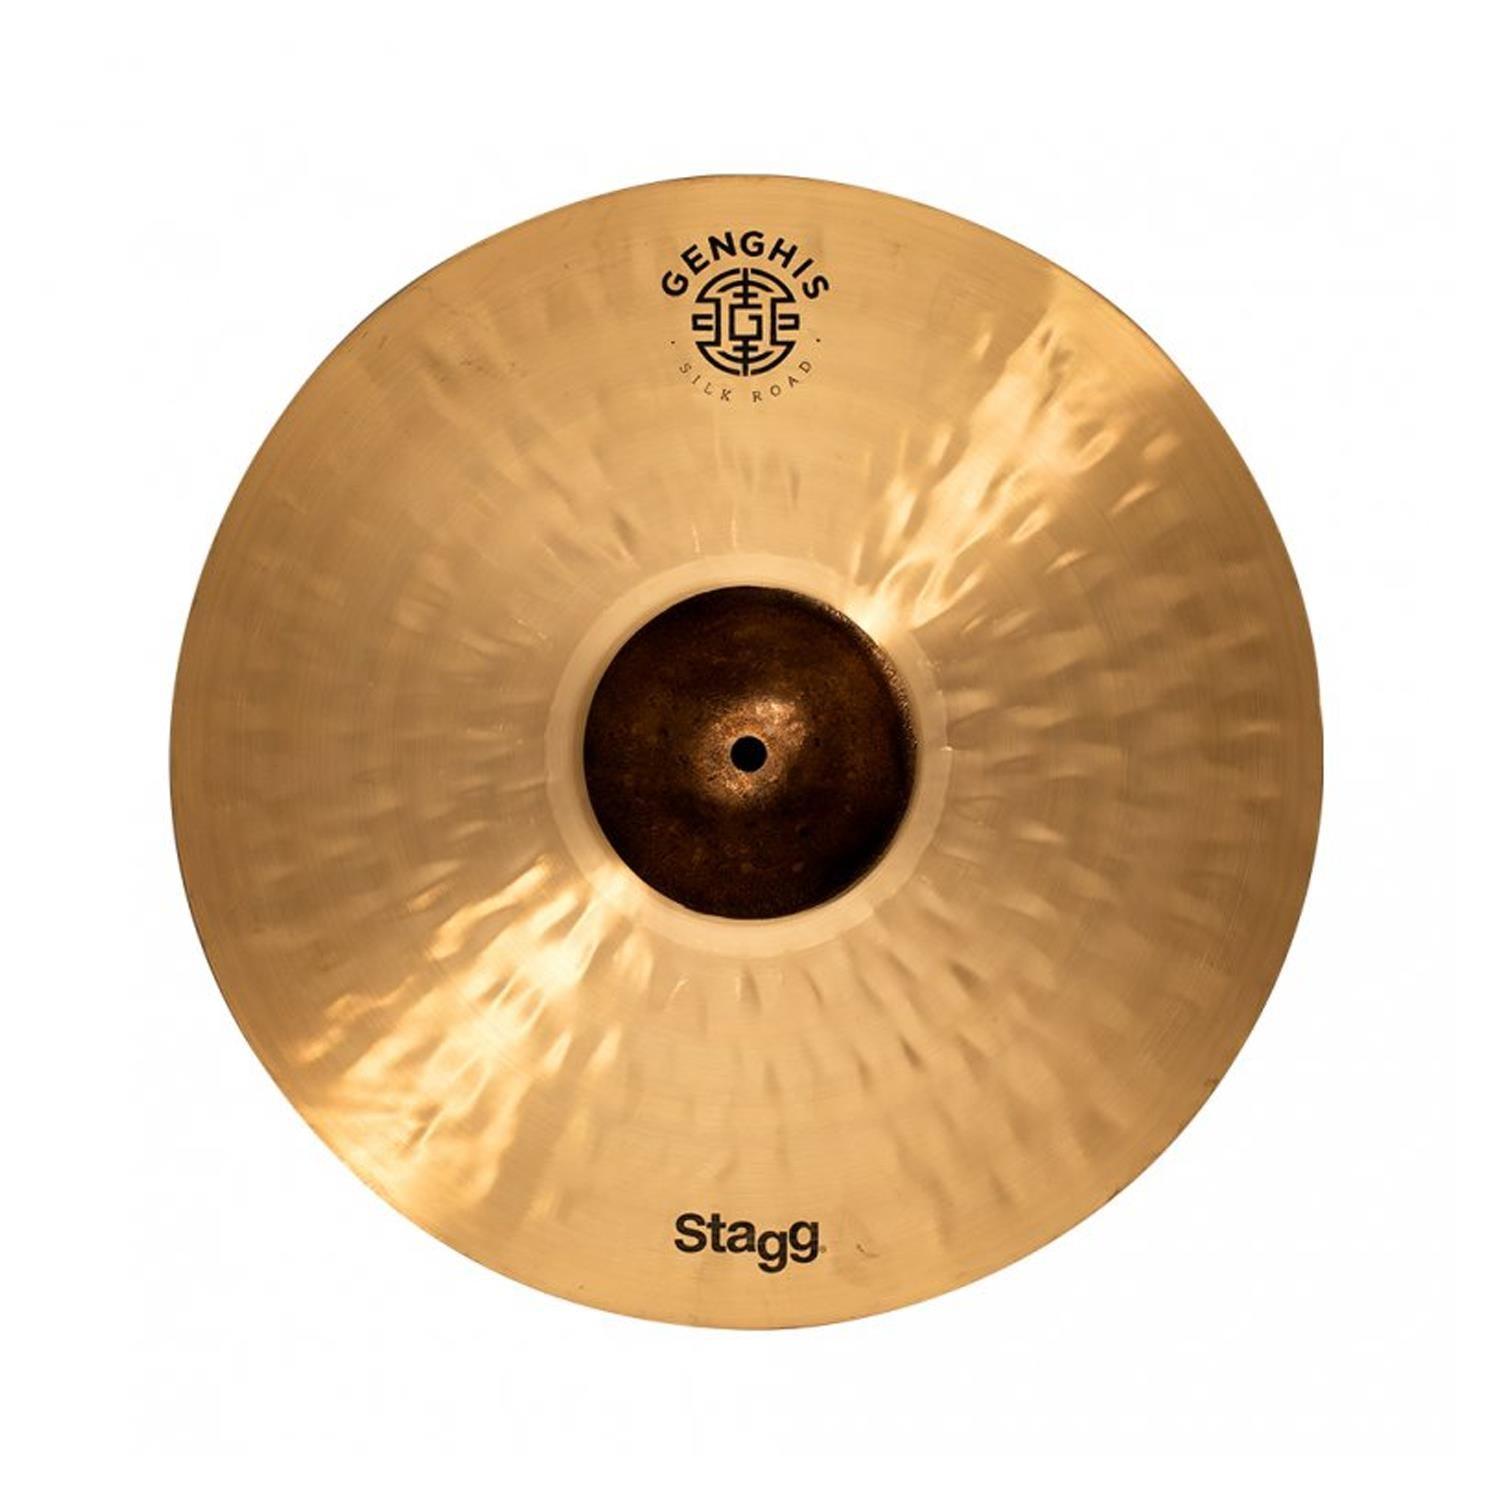 Stagg GENG-CM19E 19" Genghis Exo Medium Crash Cymbal - DY Pro Audio